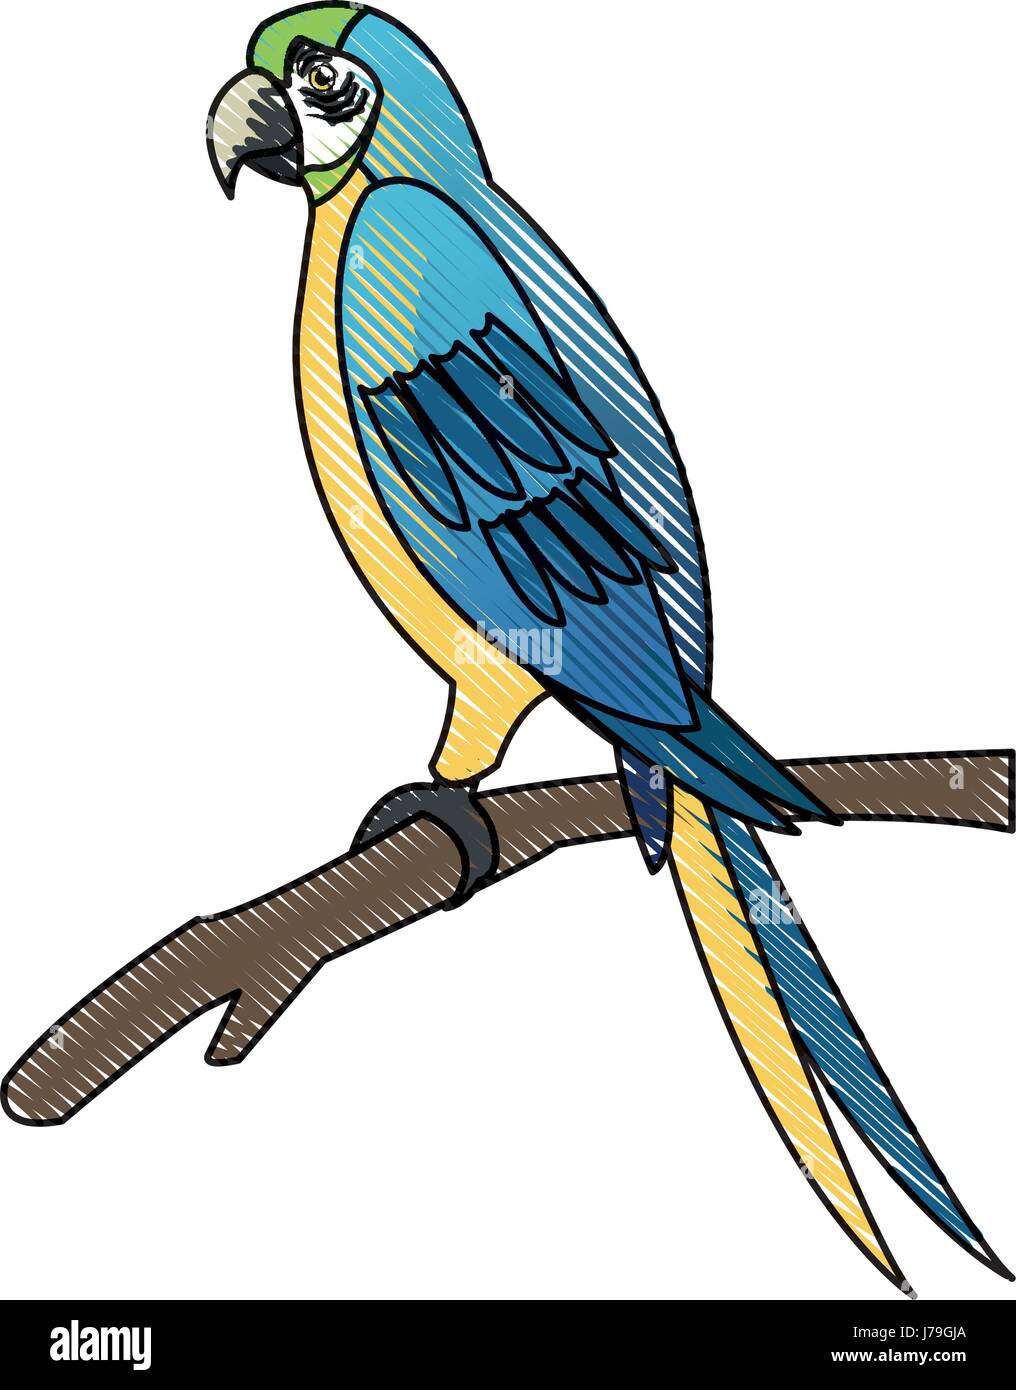 macaw amazon bird brazil wildlife image Stock Vector